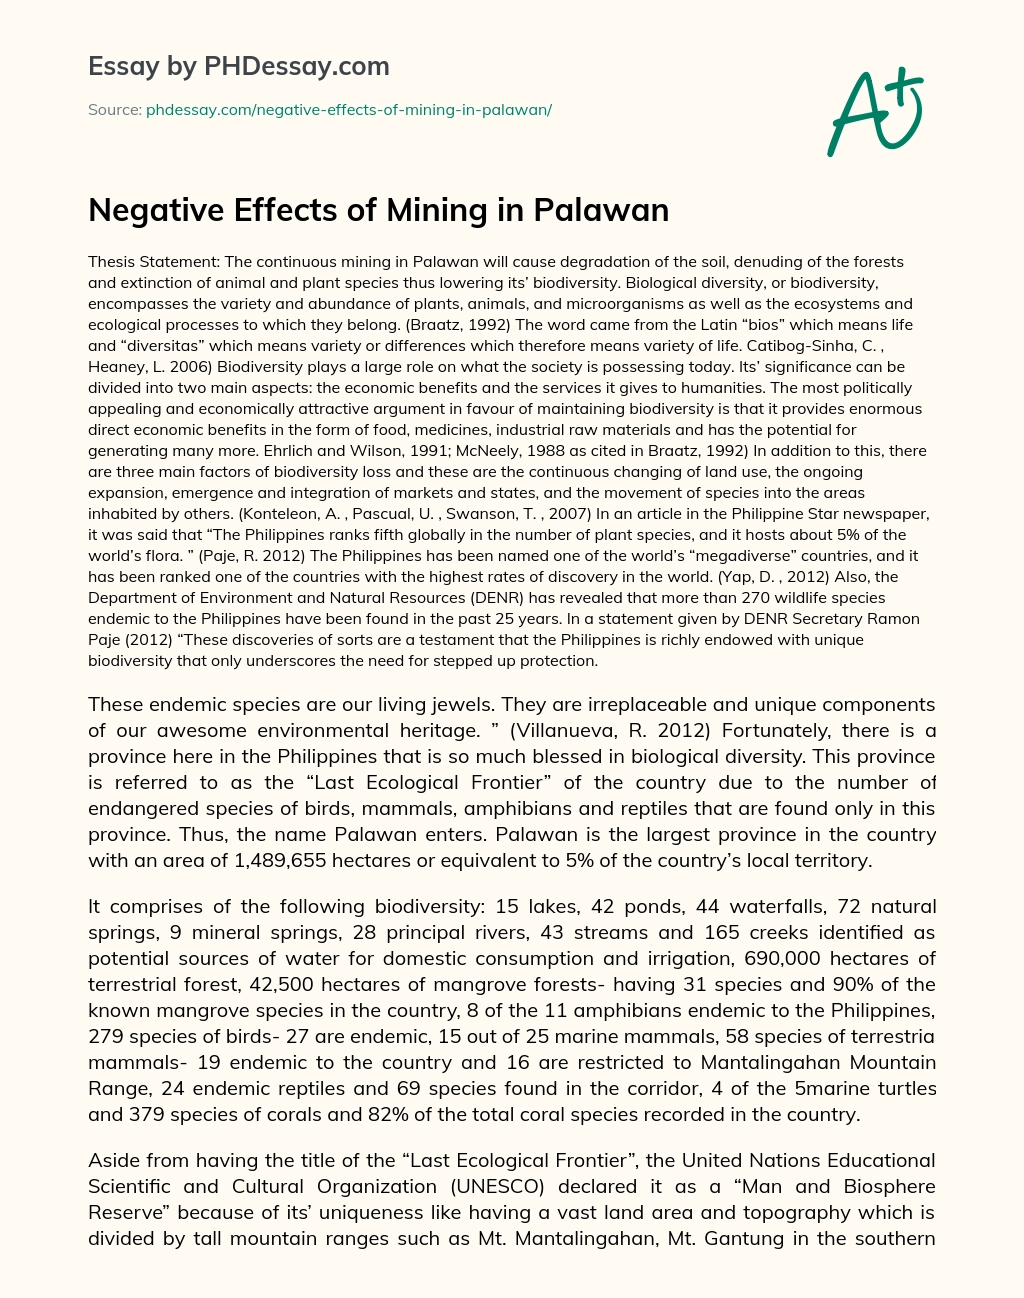 Negative Effects of Mining in Palawan essay